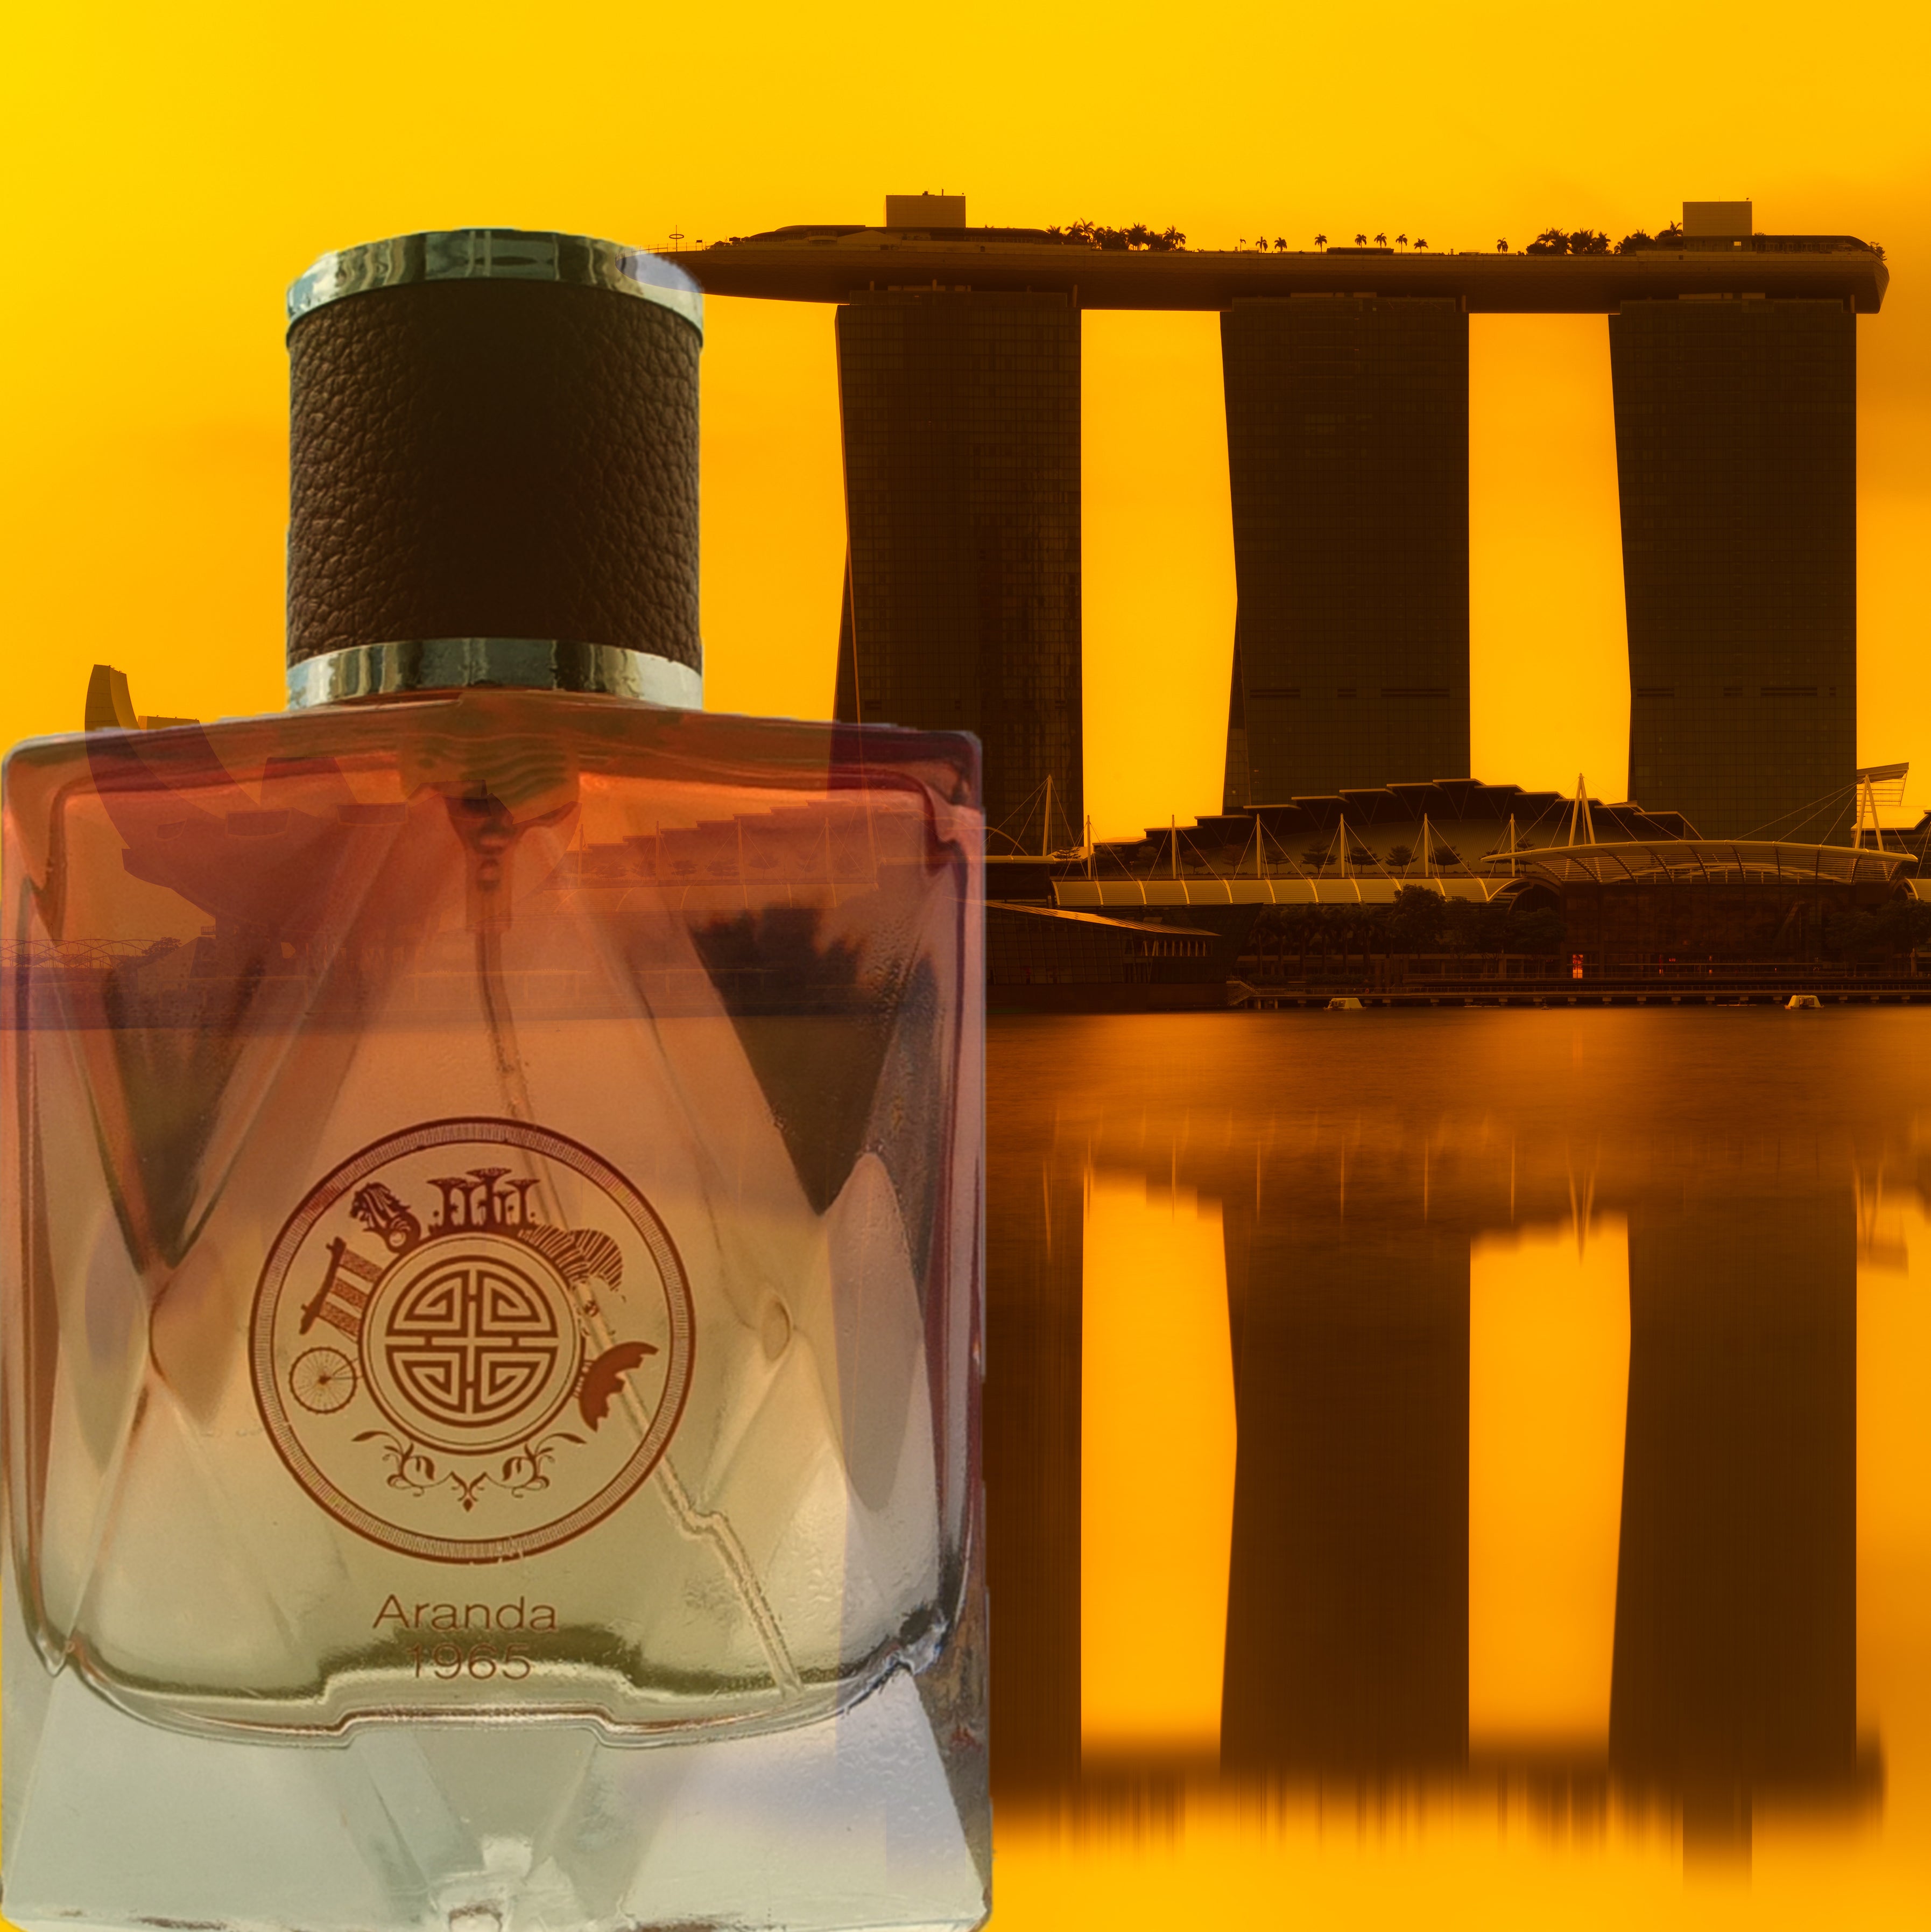 Online perfume store - Singapore Memories, a perfect Gift for Overseas Friend. Perfume made from Aranda Orchids. Aranda 1965